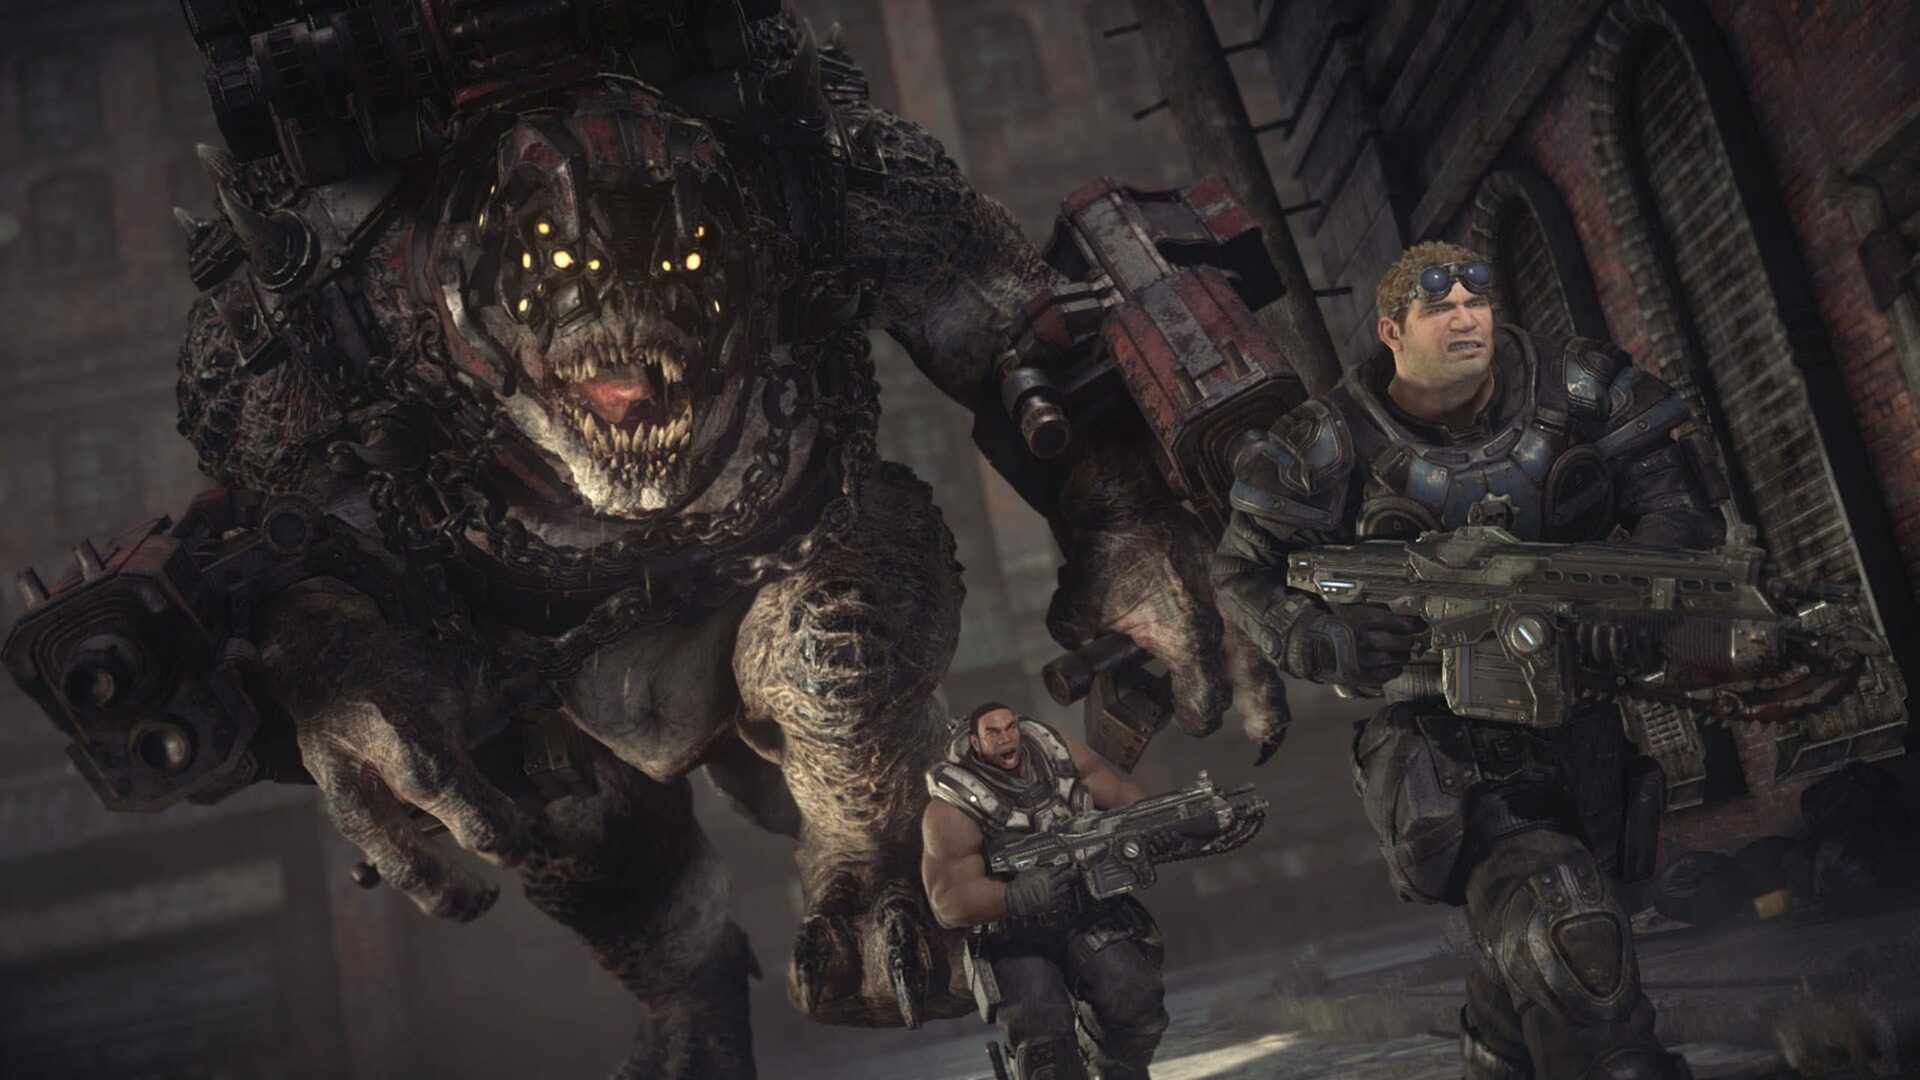 Gears Of War 4 Ultimate Edition - Xbox One [Digital] - Yahoo Shopping